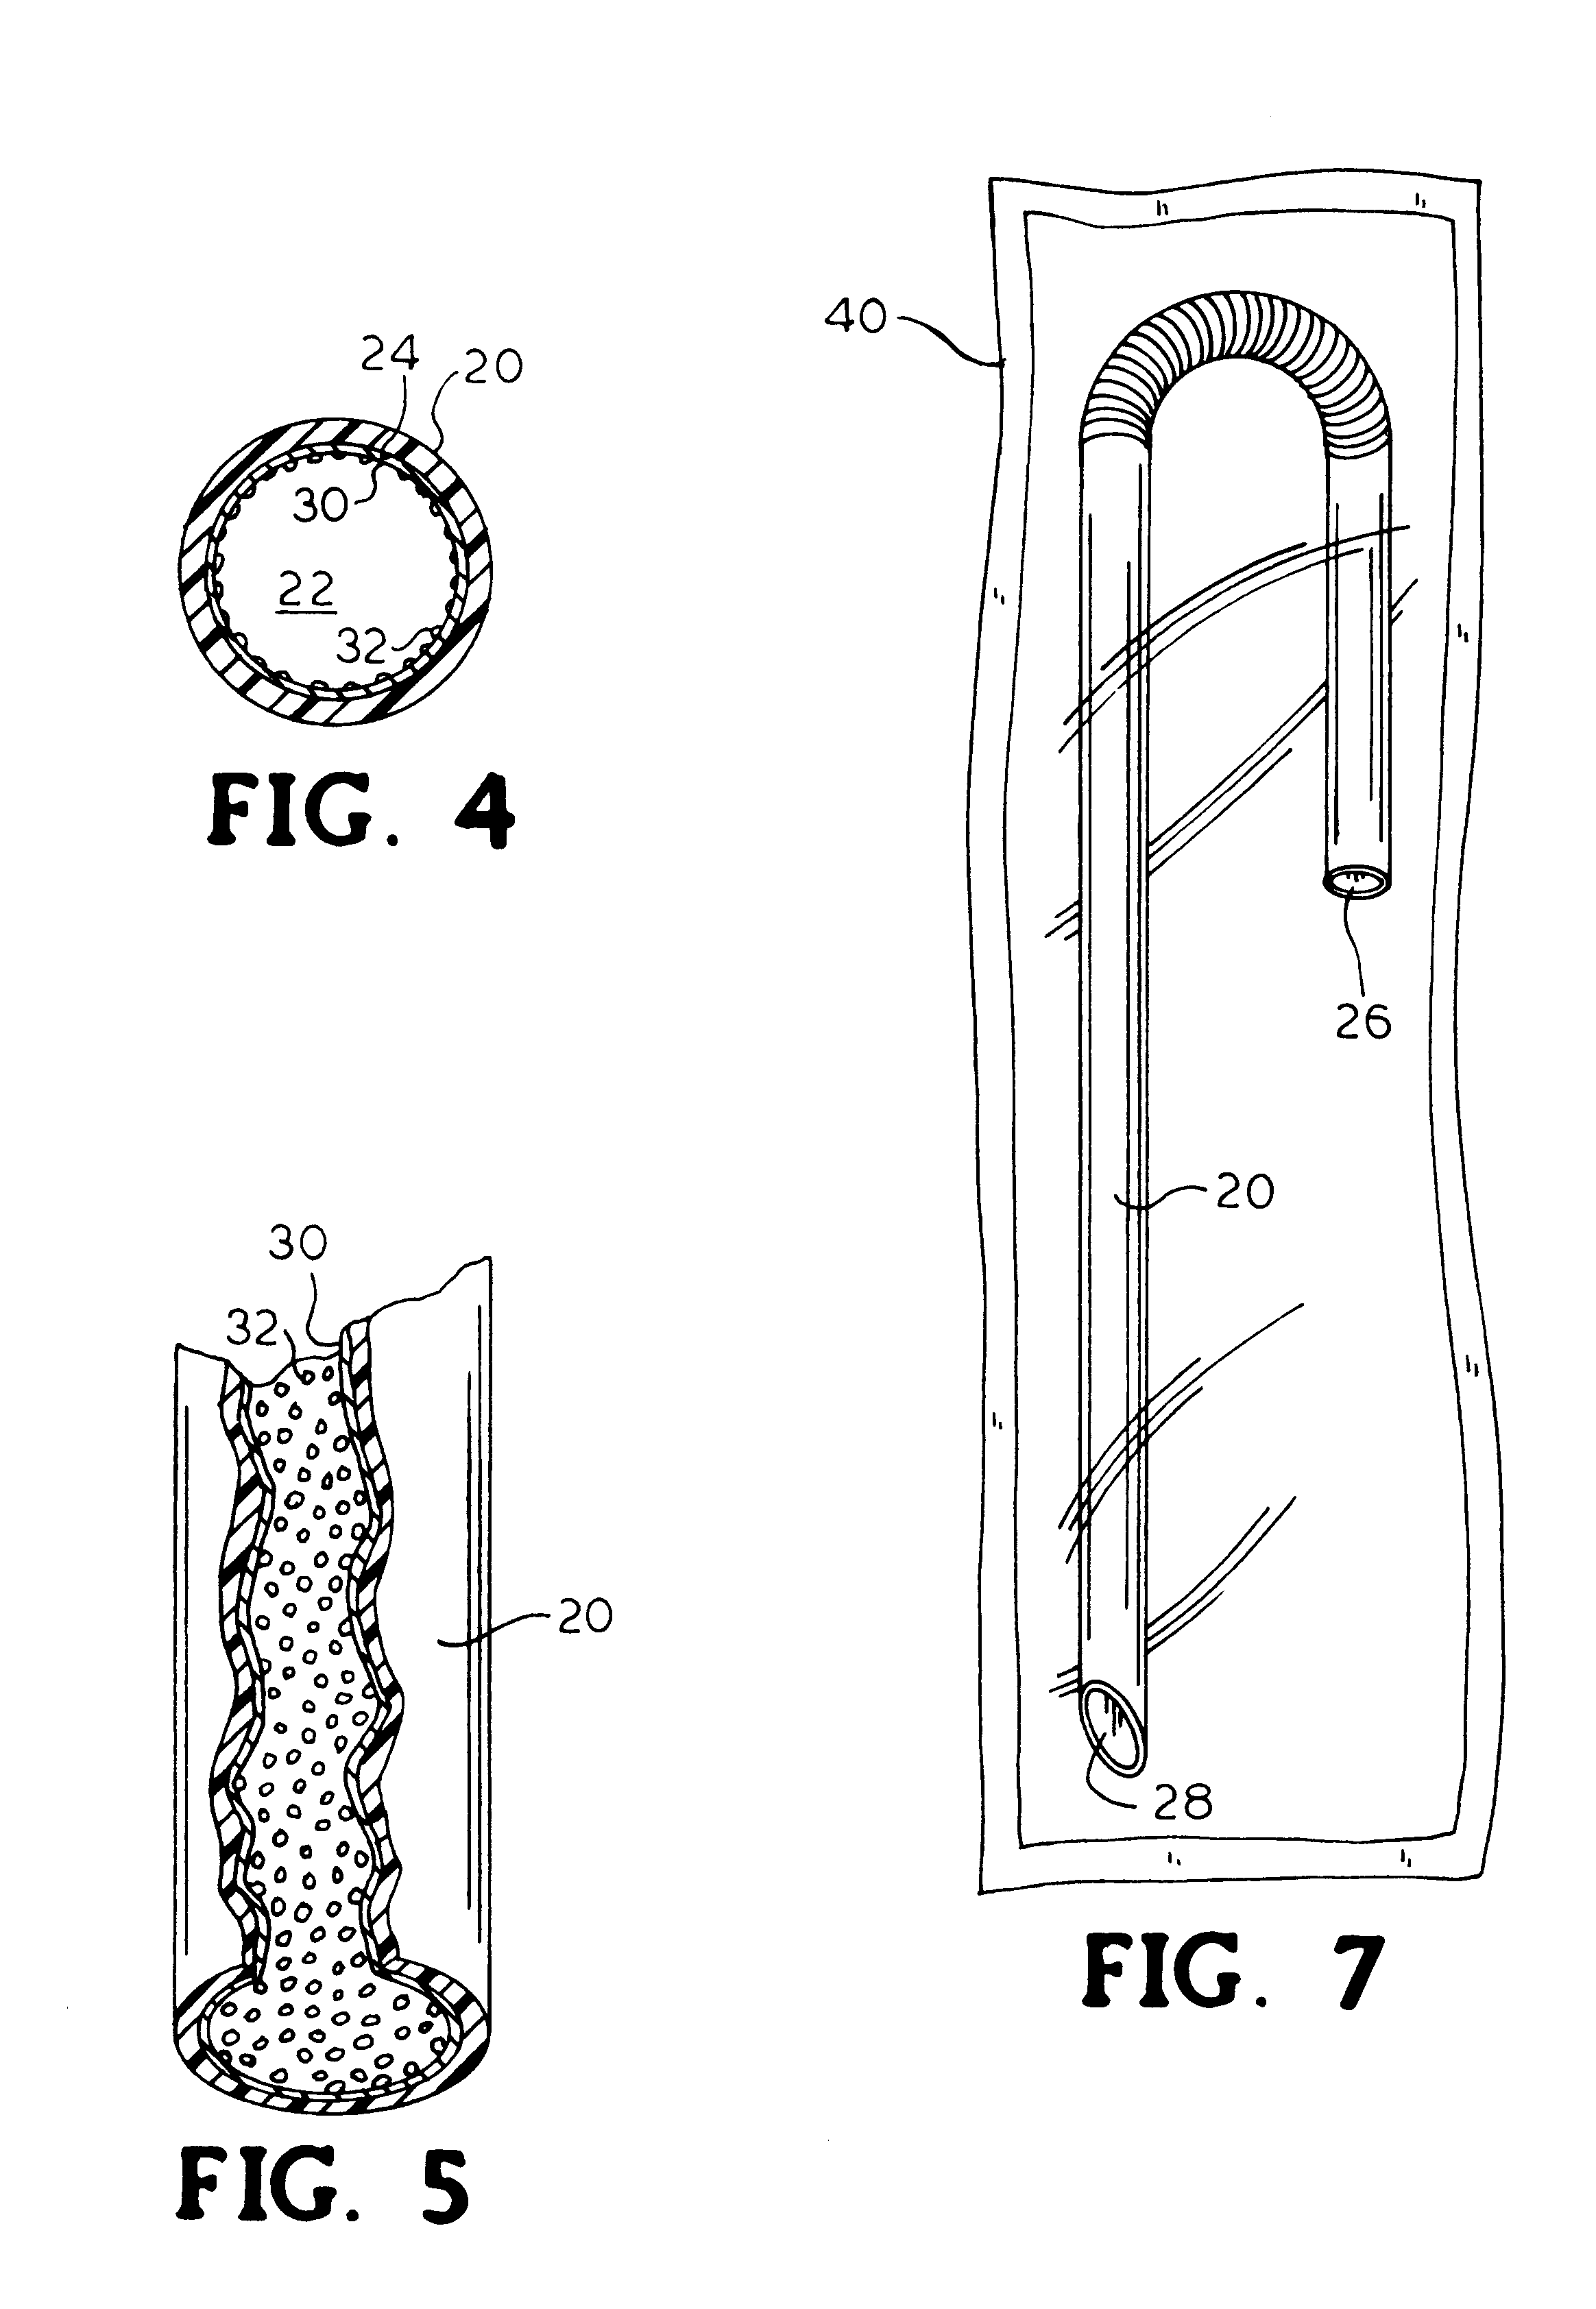 Enclosed living cell dispensing tube